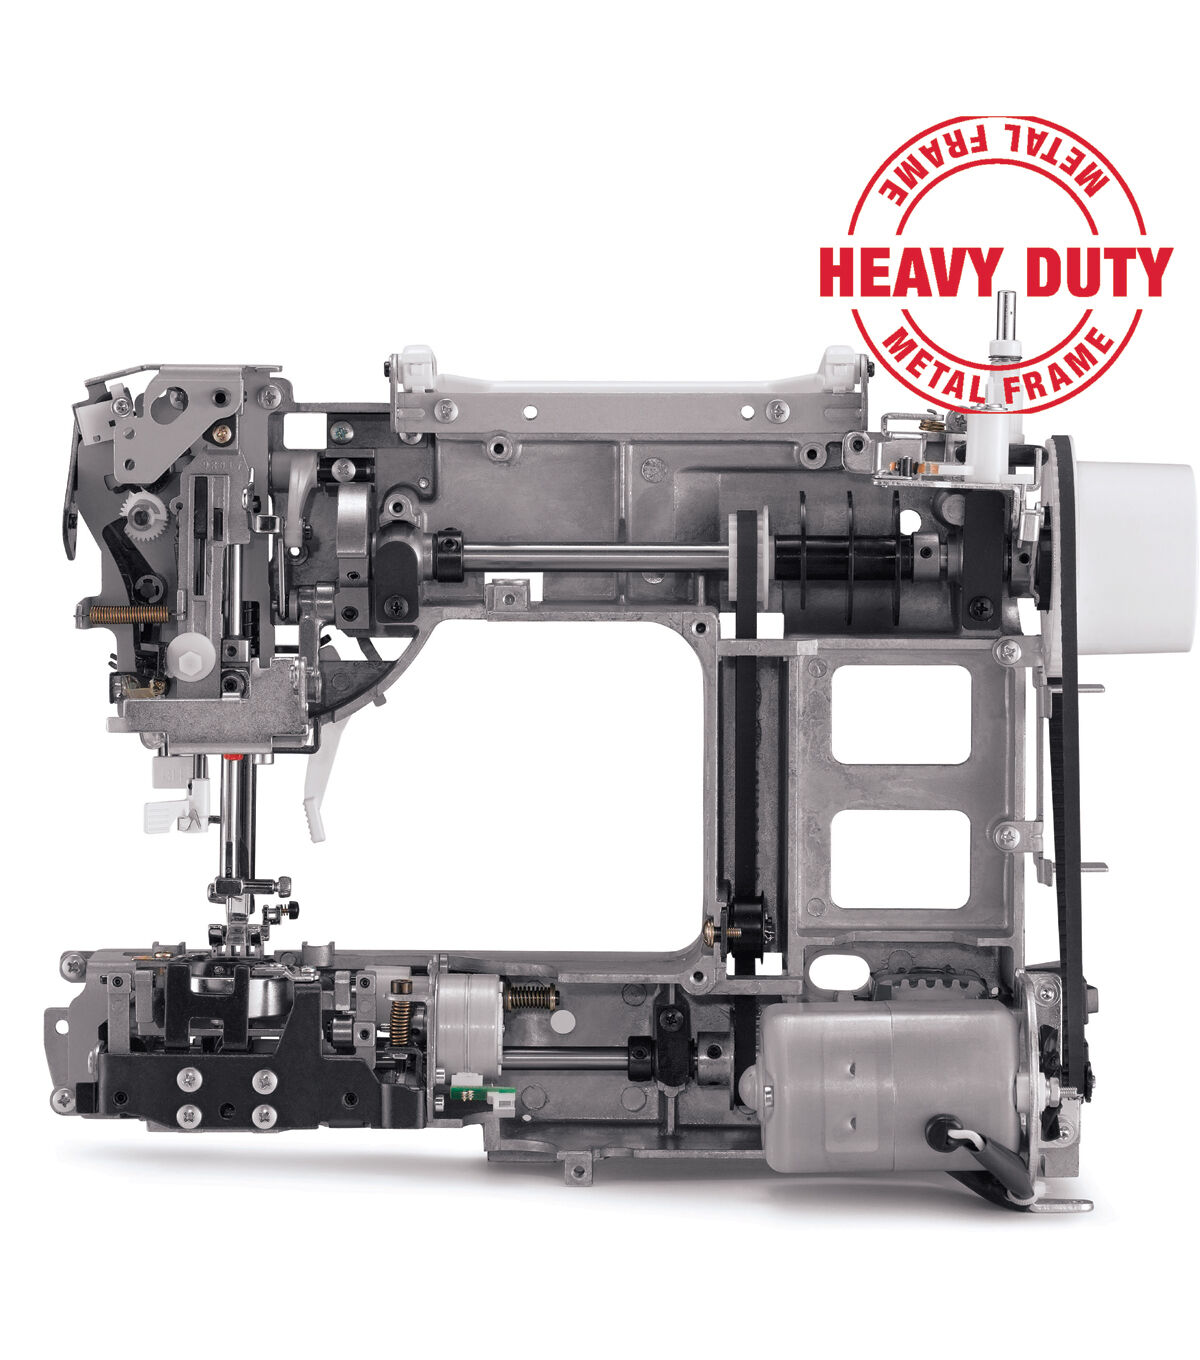 Singer Heavy Duty 4411 Sewing Machine